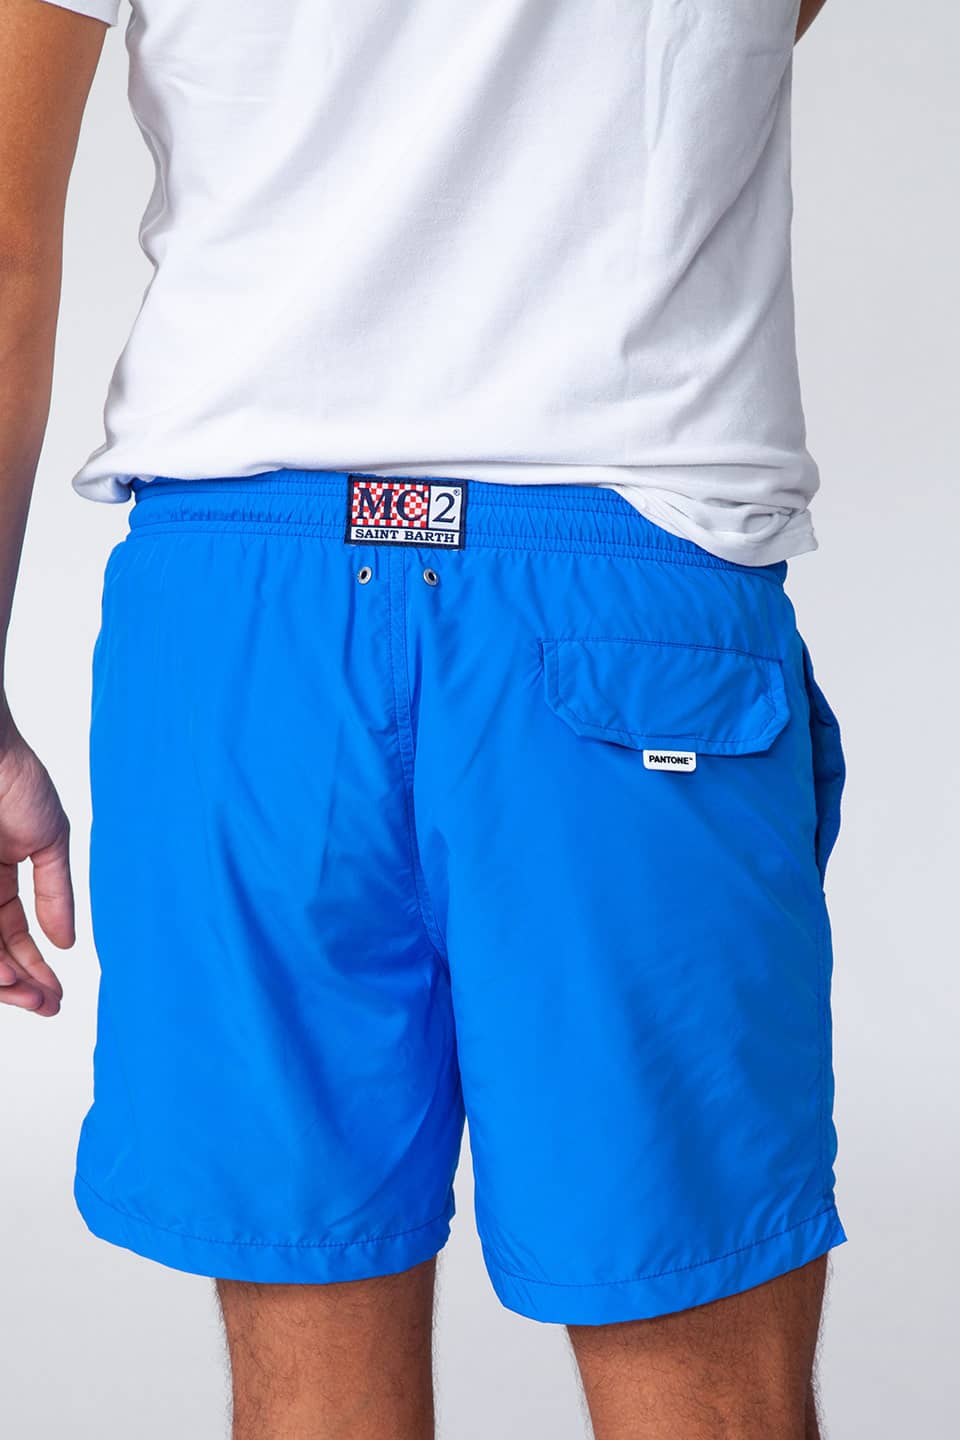 Thumbnail for Product gallery 3, MC saint barth male swimwear pantone bluette detail